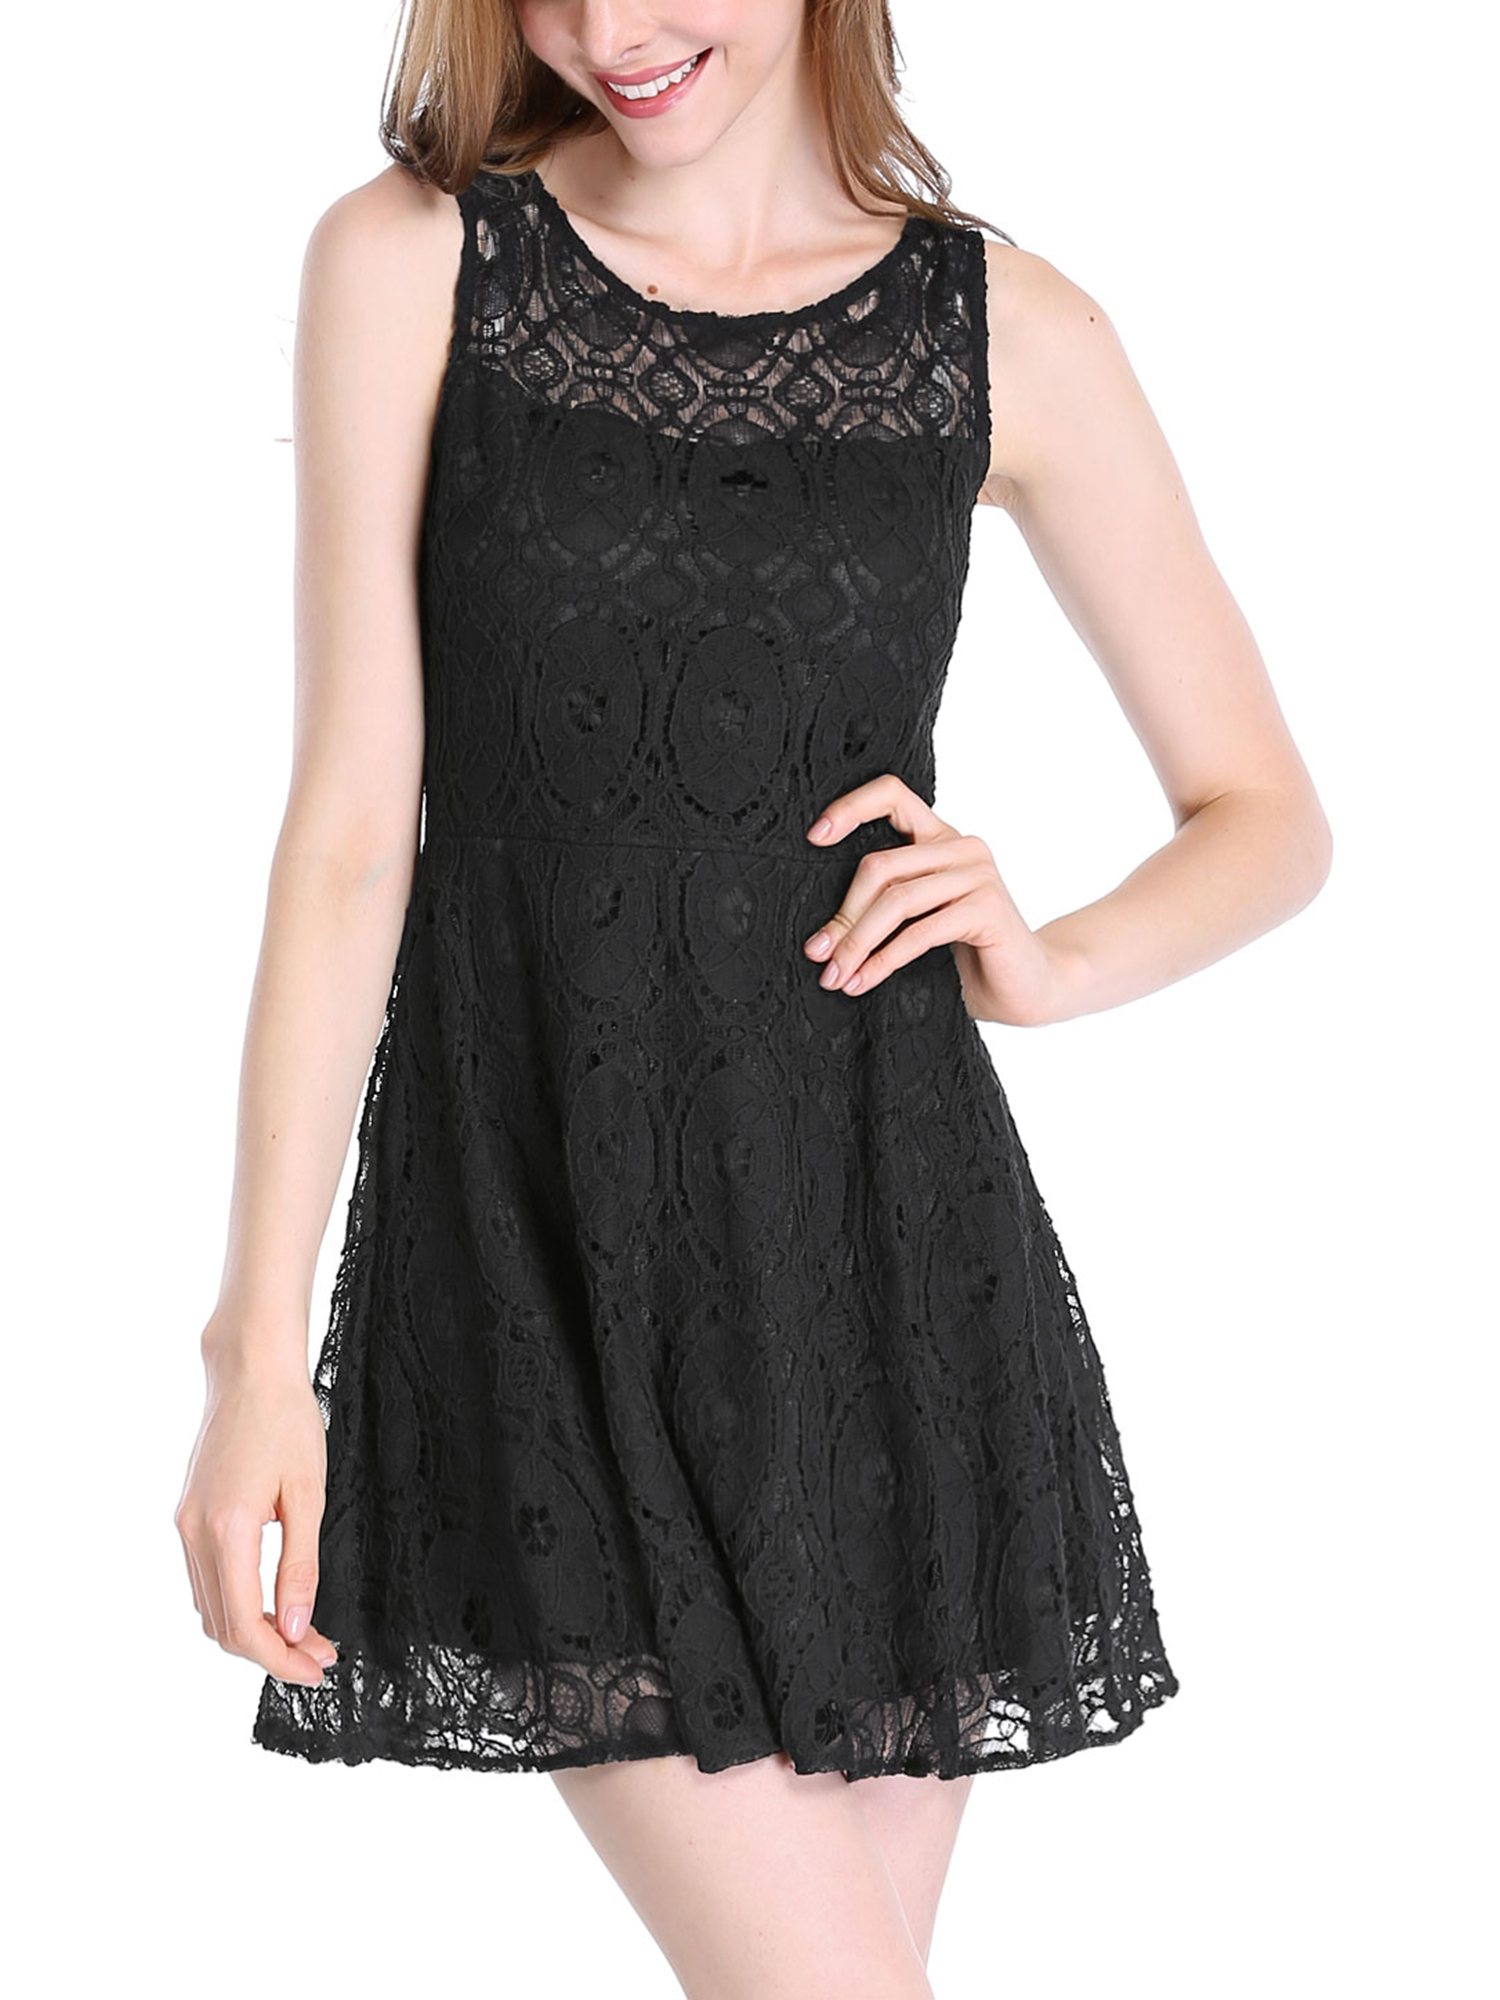 MODA NOVA Junior's Floral Lace Sleeveless Semi Sheer Flare Mini Dress Black L - image 3 of 6